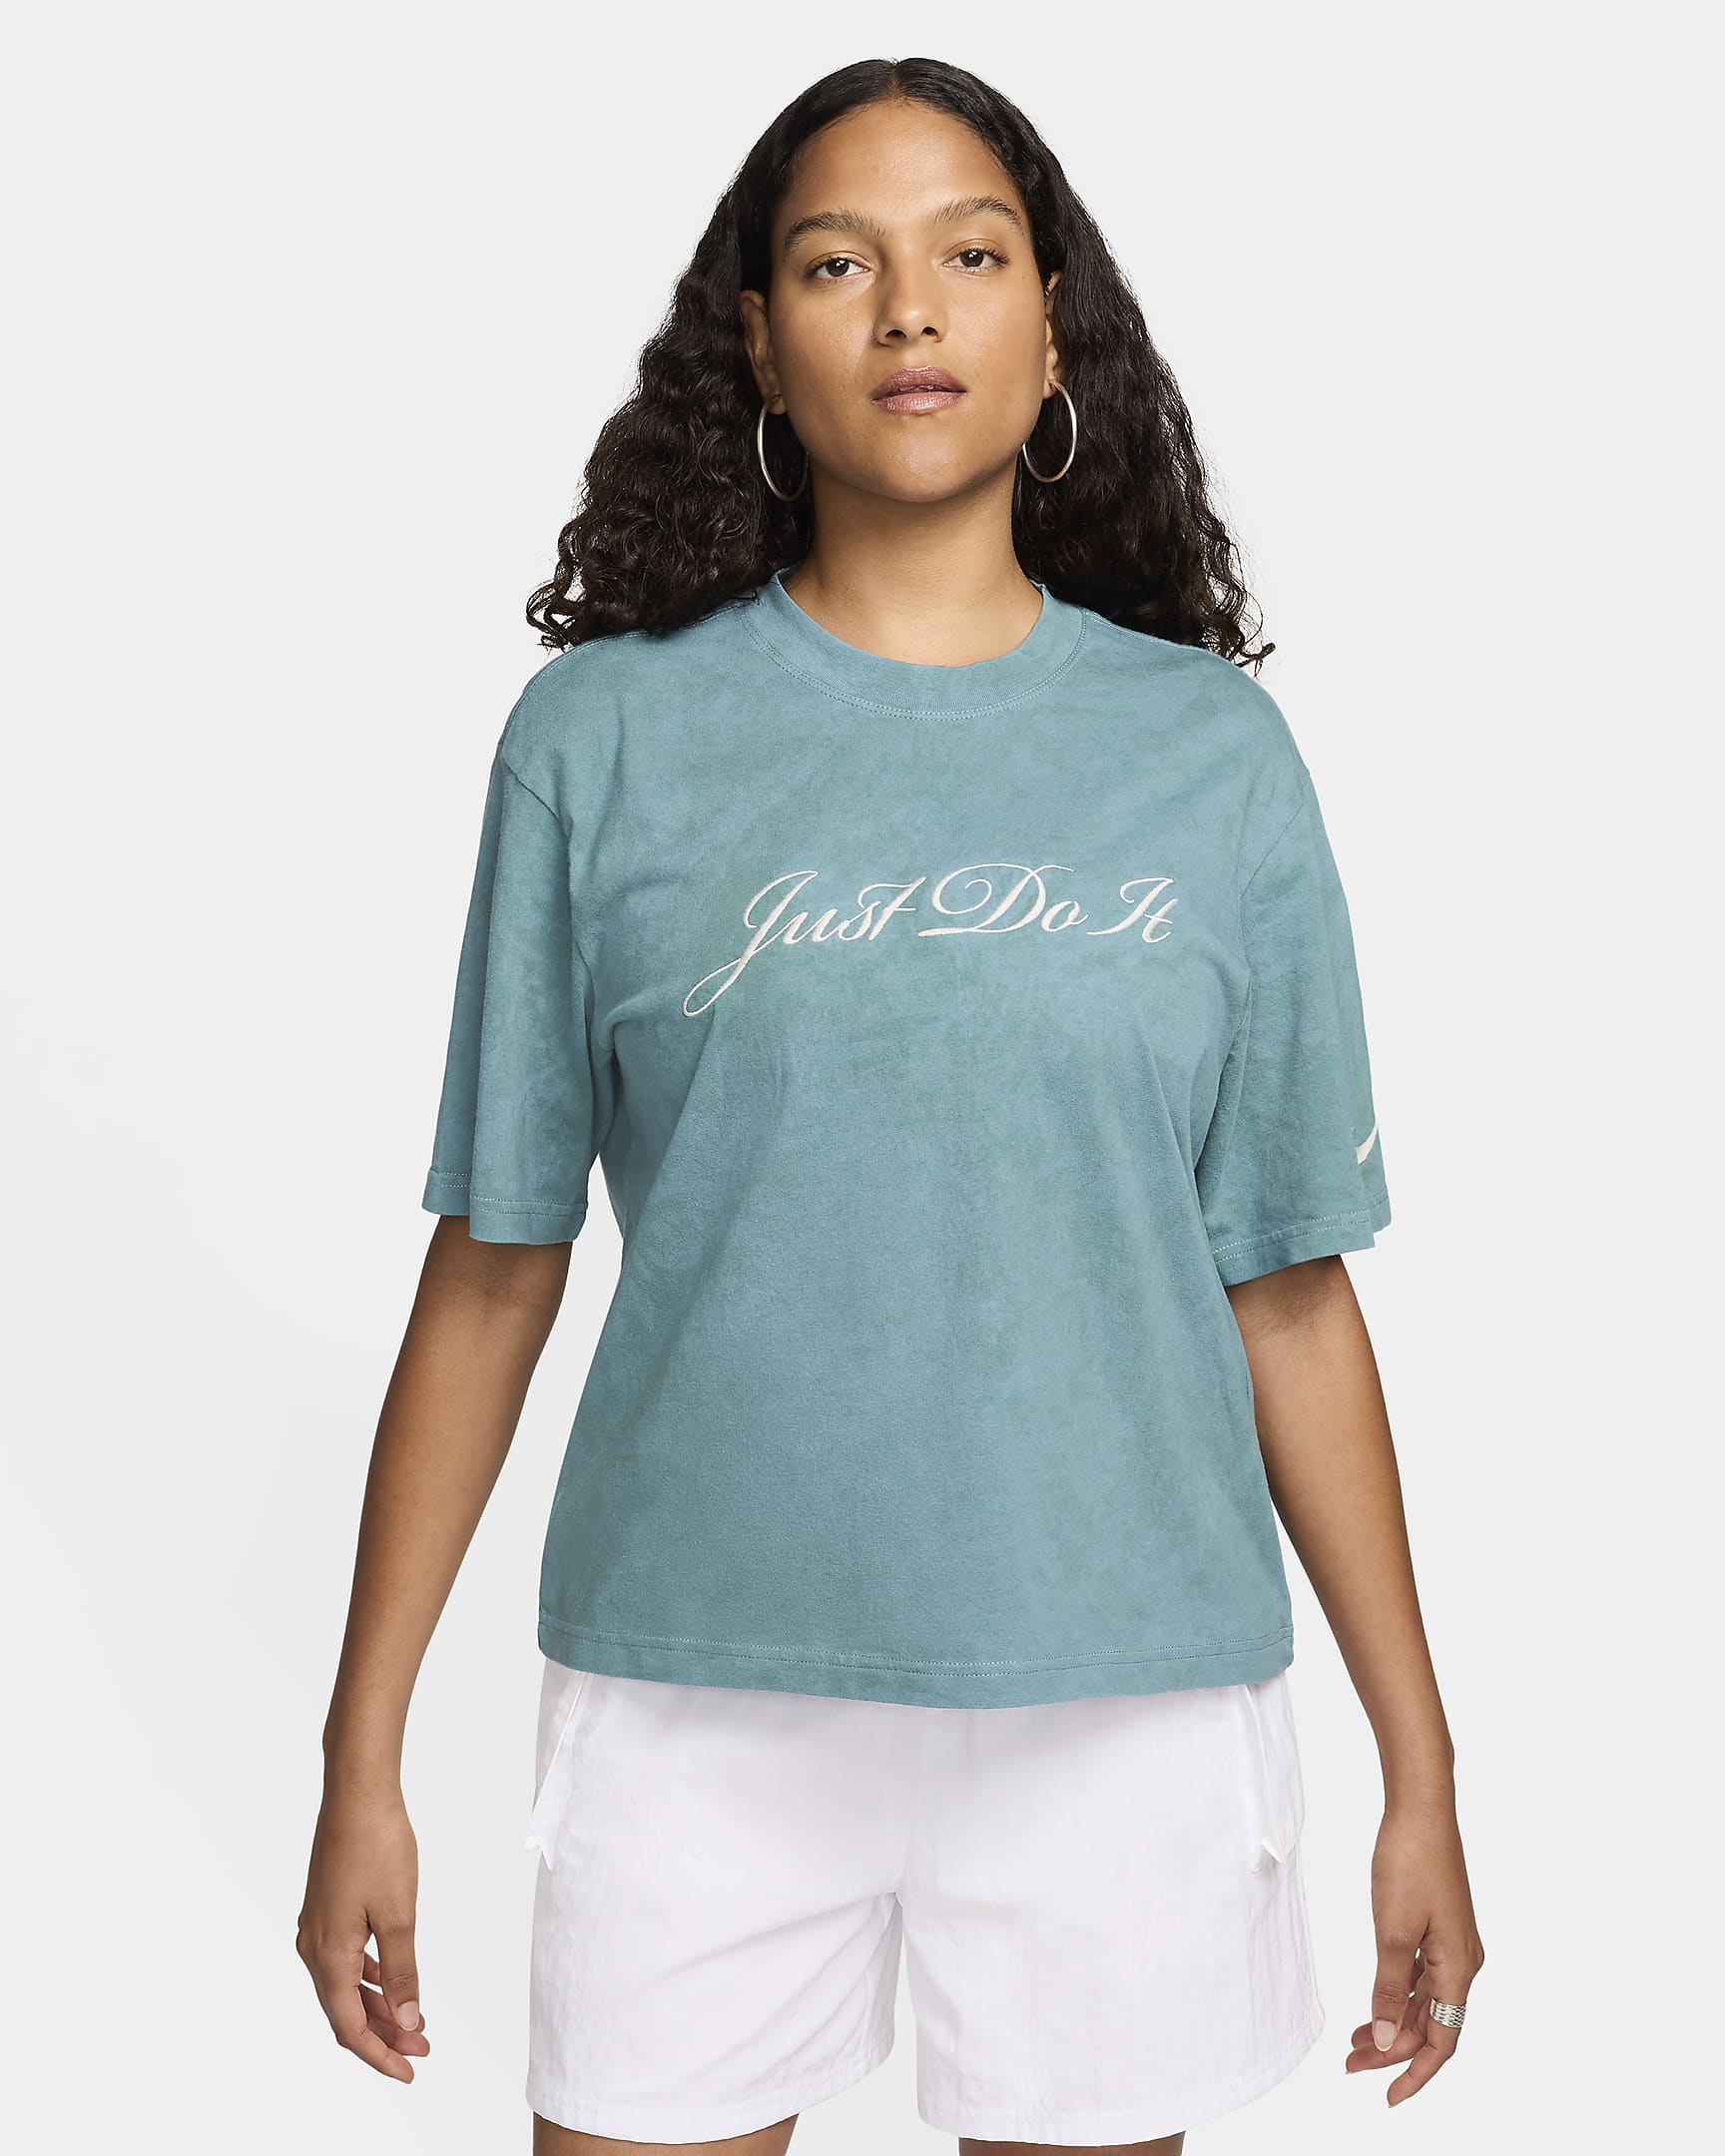 Nike Sportswear Women's T-Shirt - Bicoastal/Bicoastal